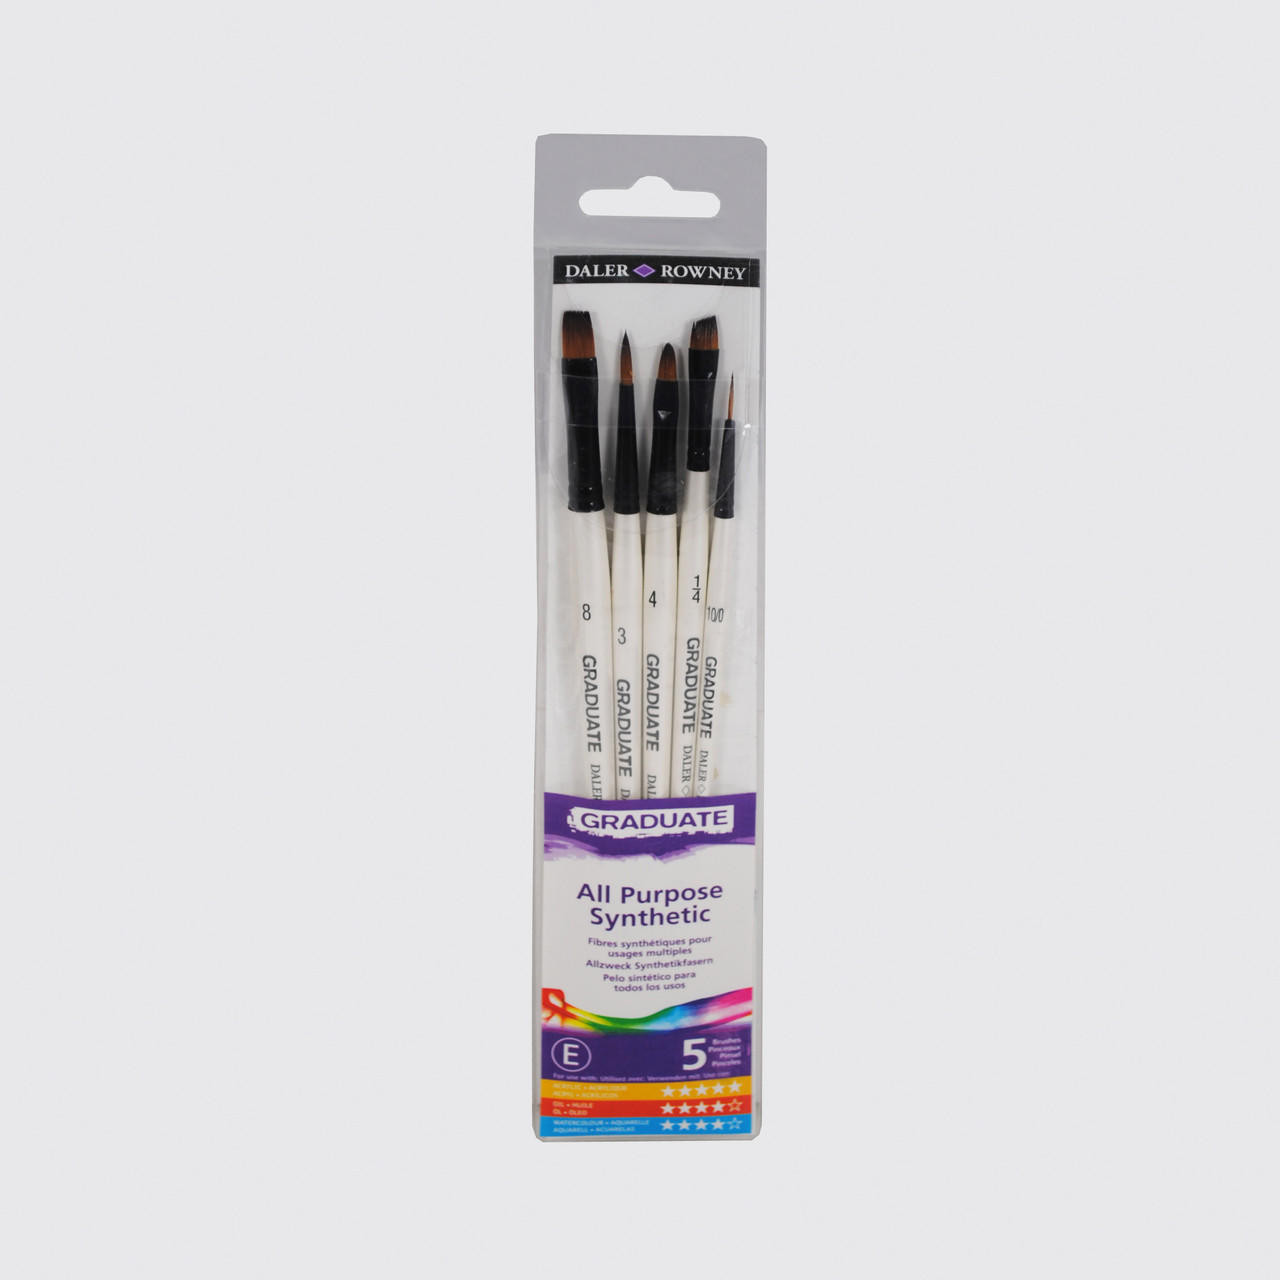 Daler Rowney Graduate Brush Synthetic Select Set of 5